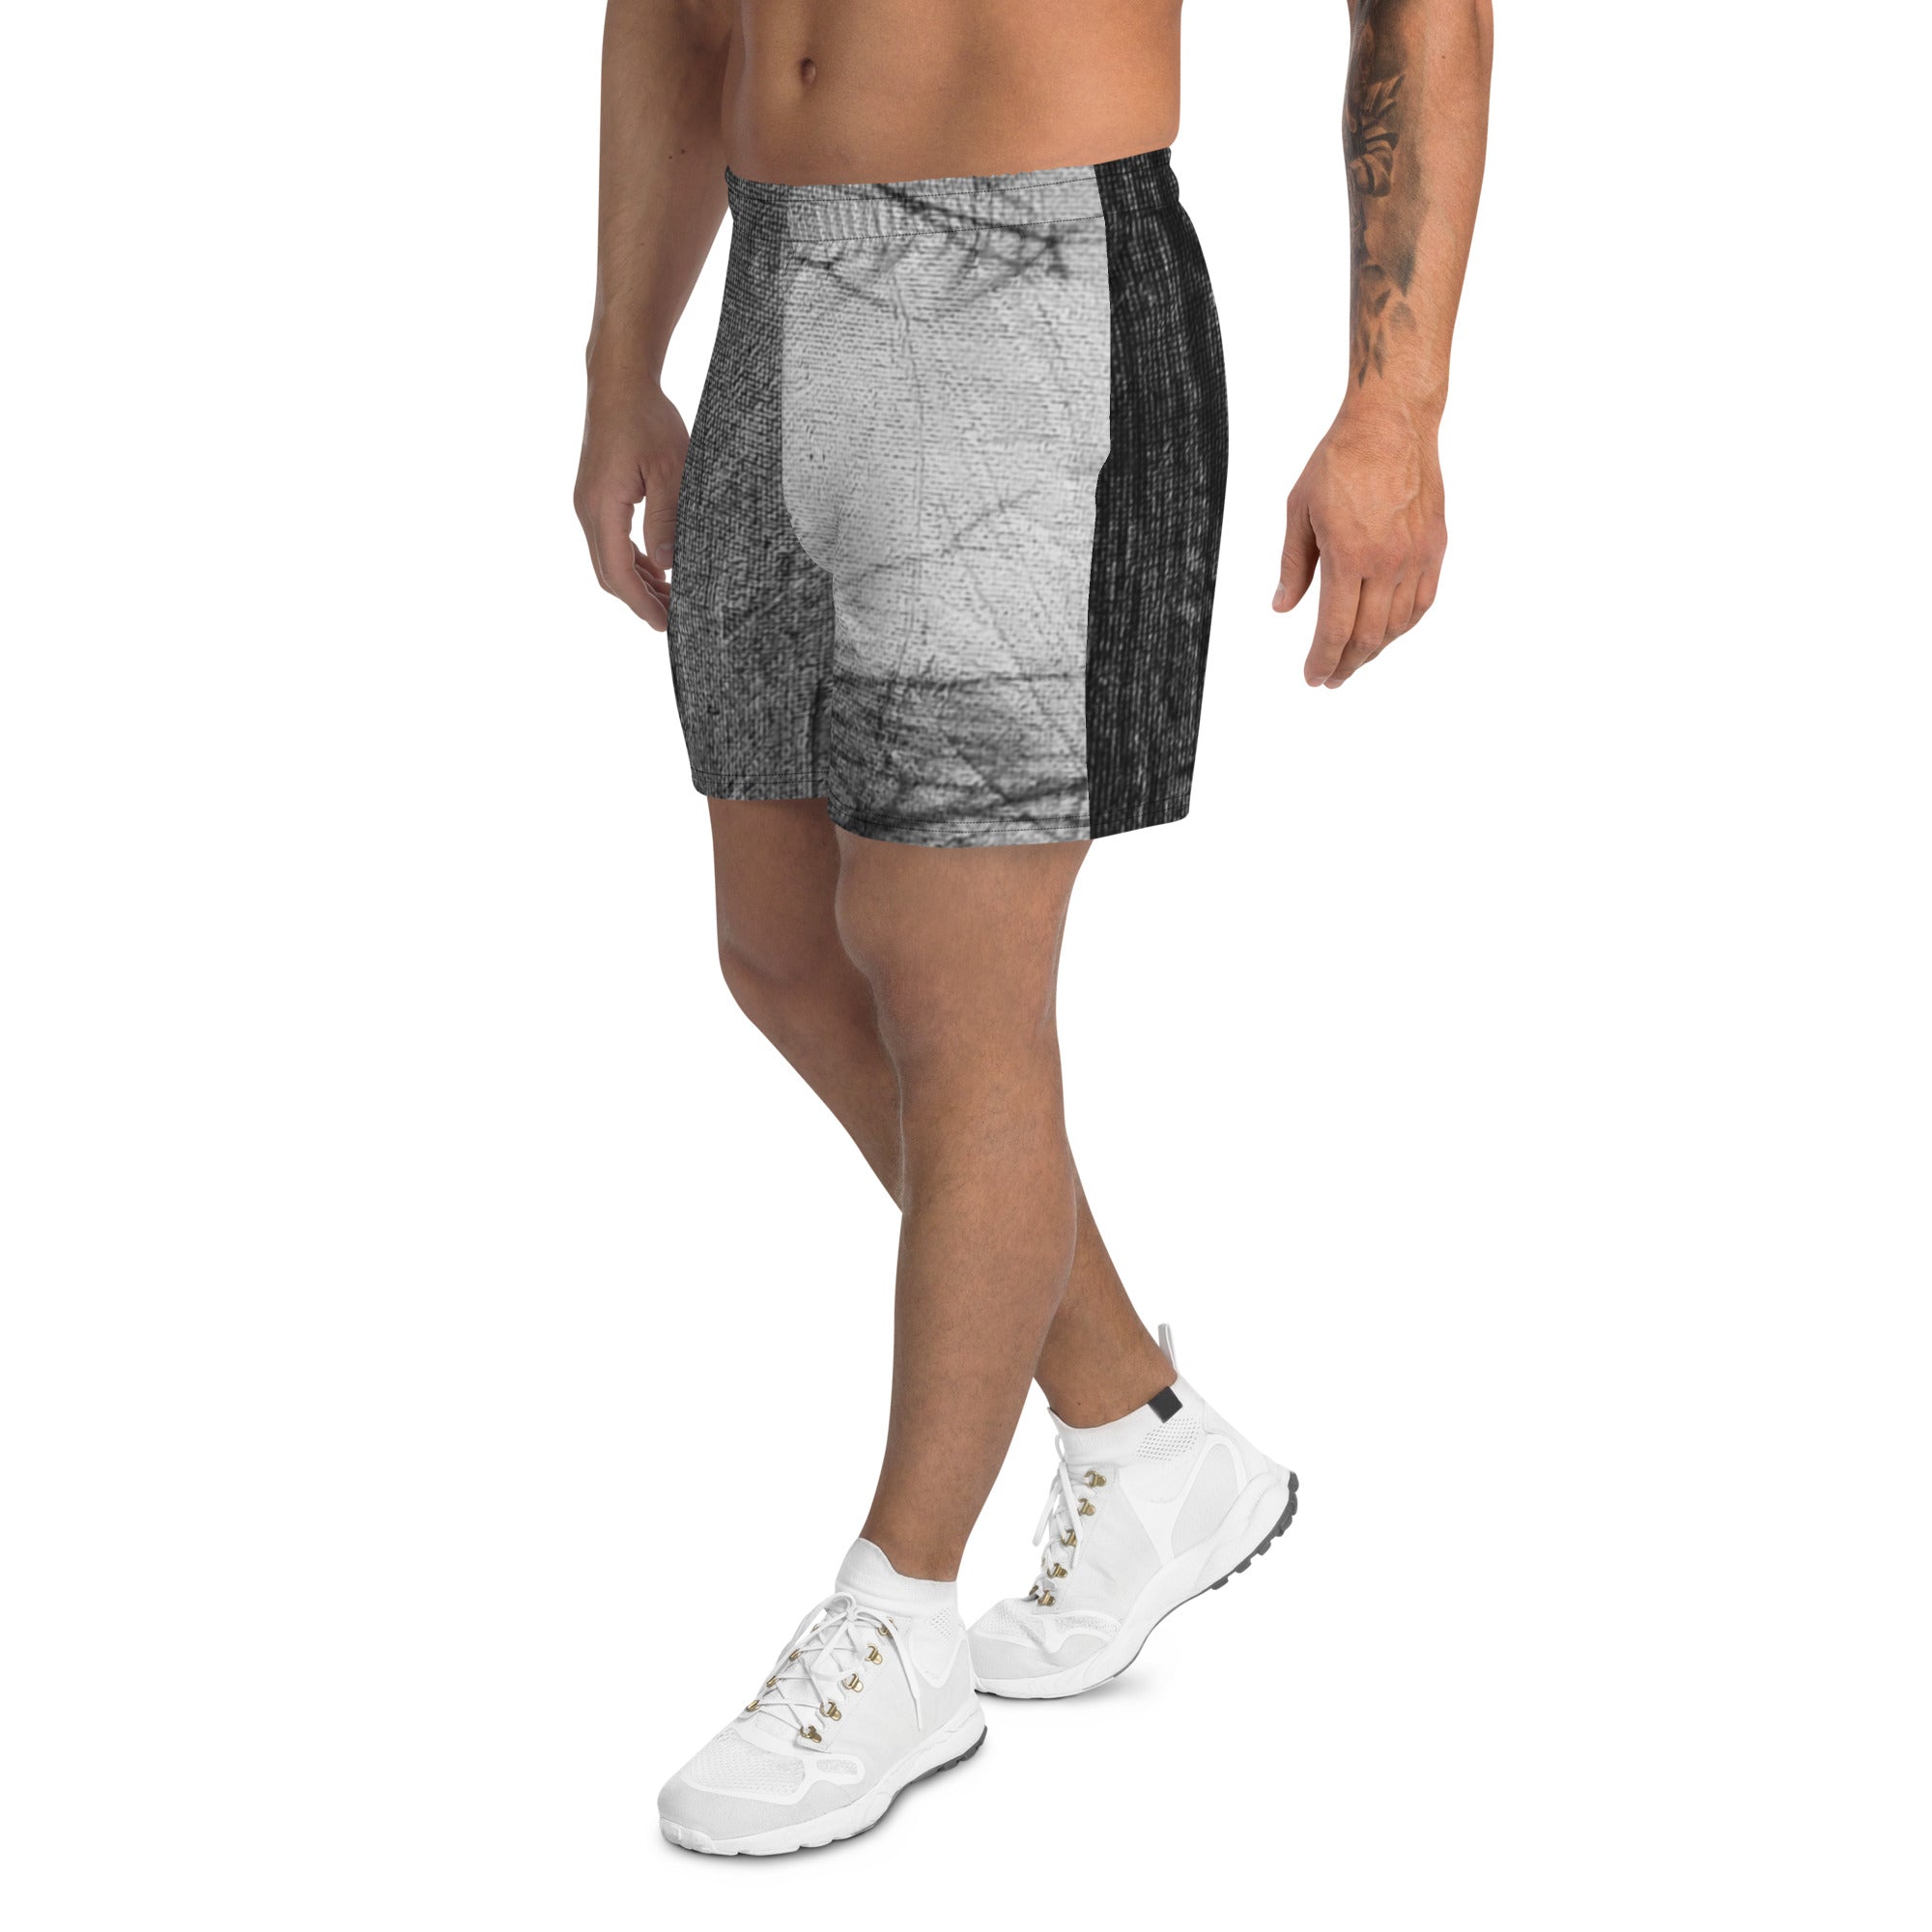 Atra Men's Athletic Long Shorts